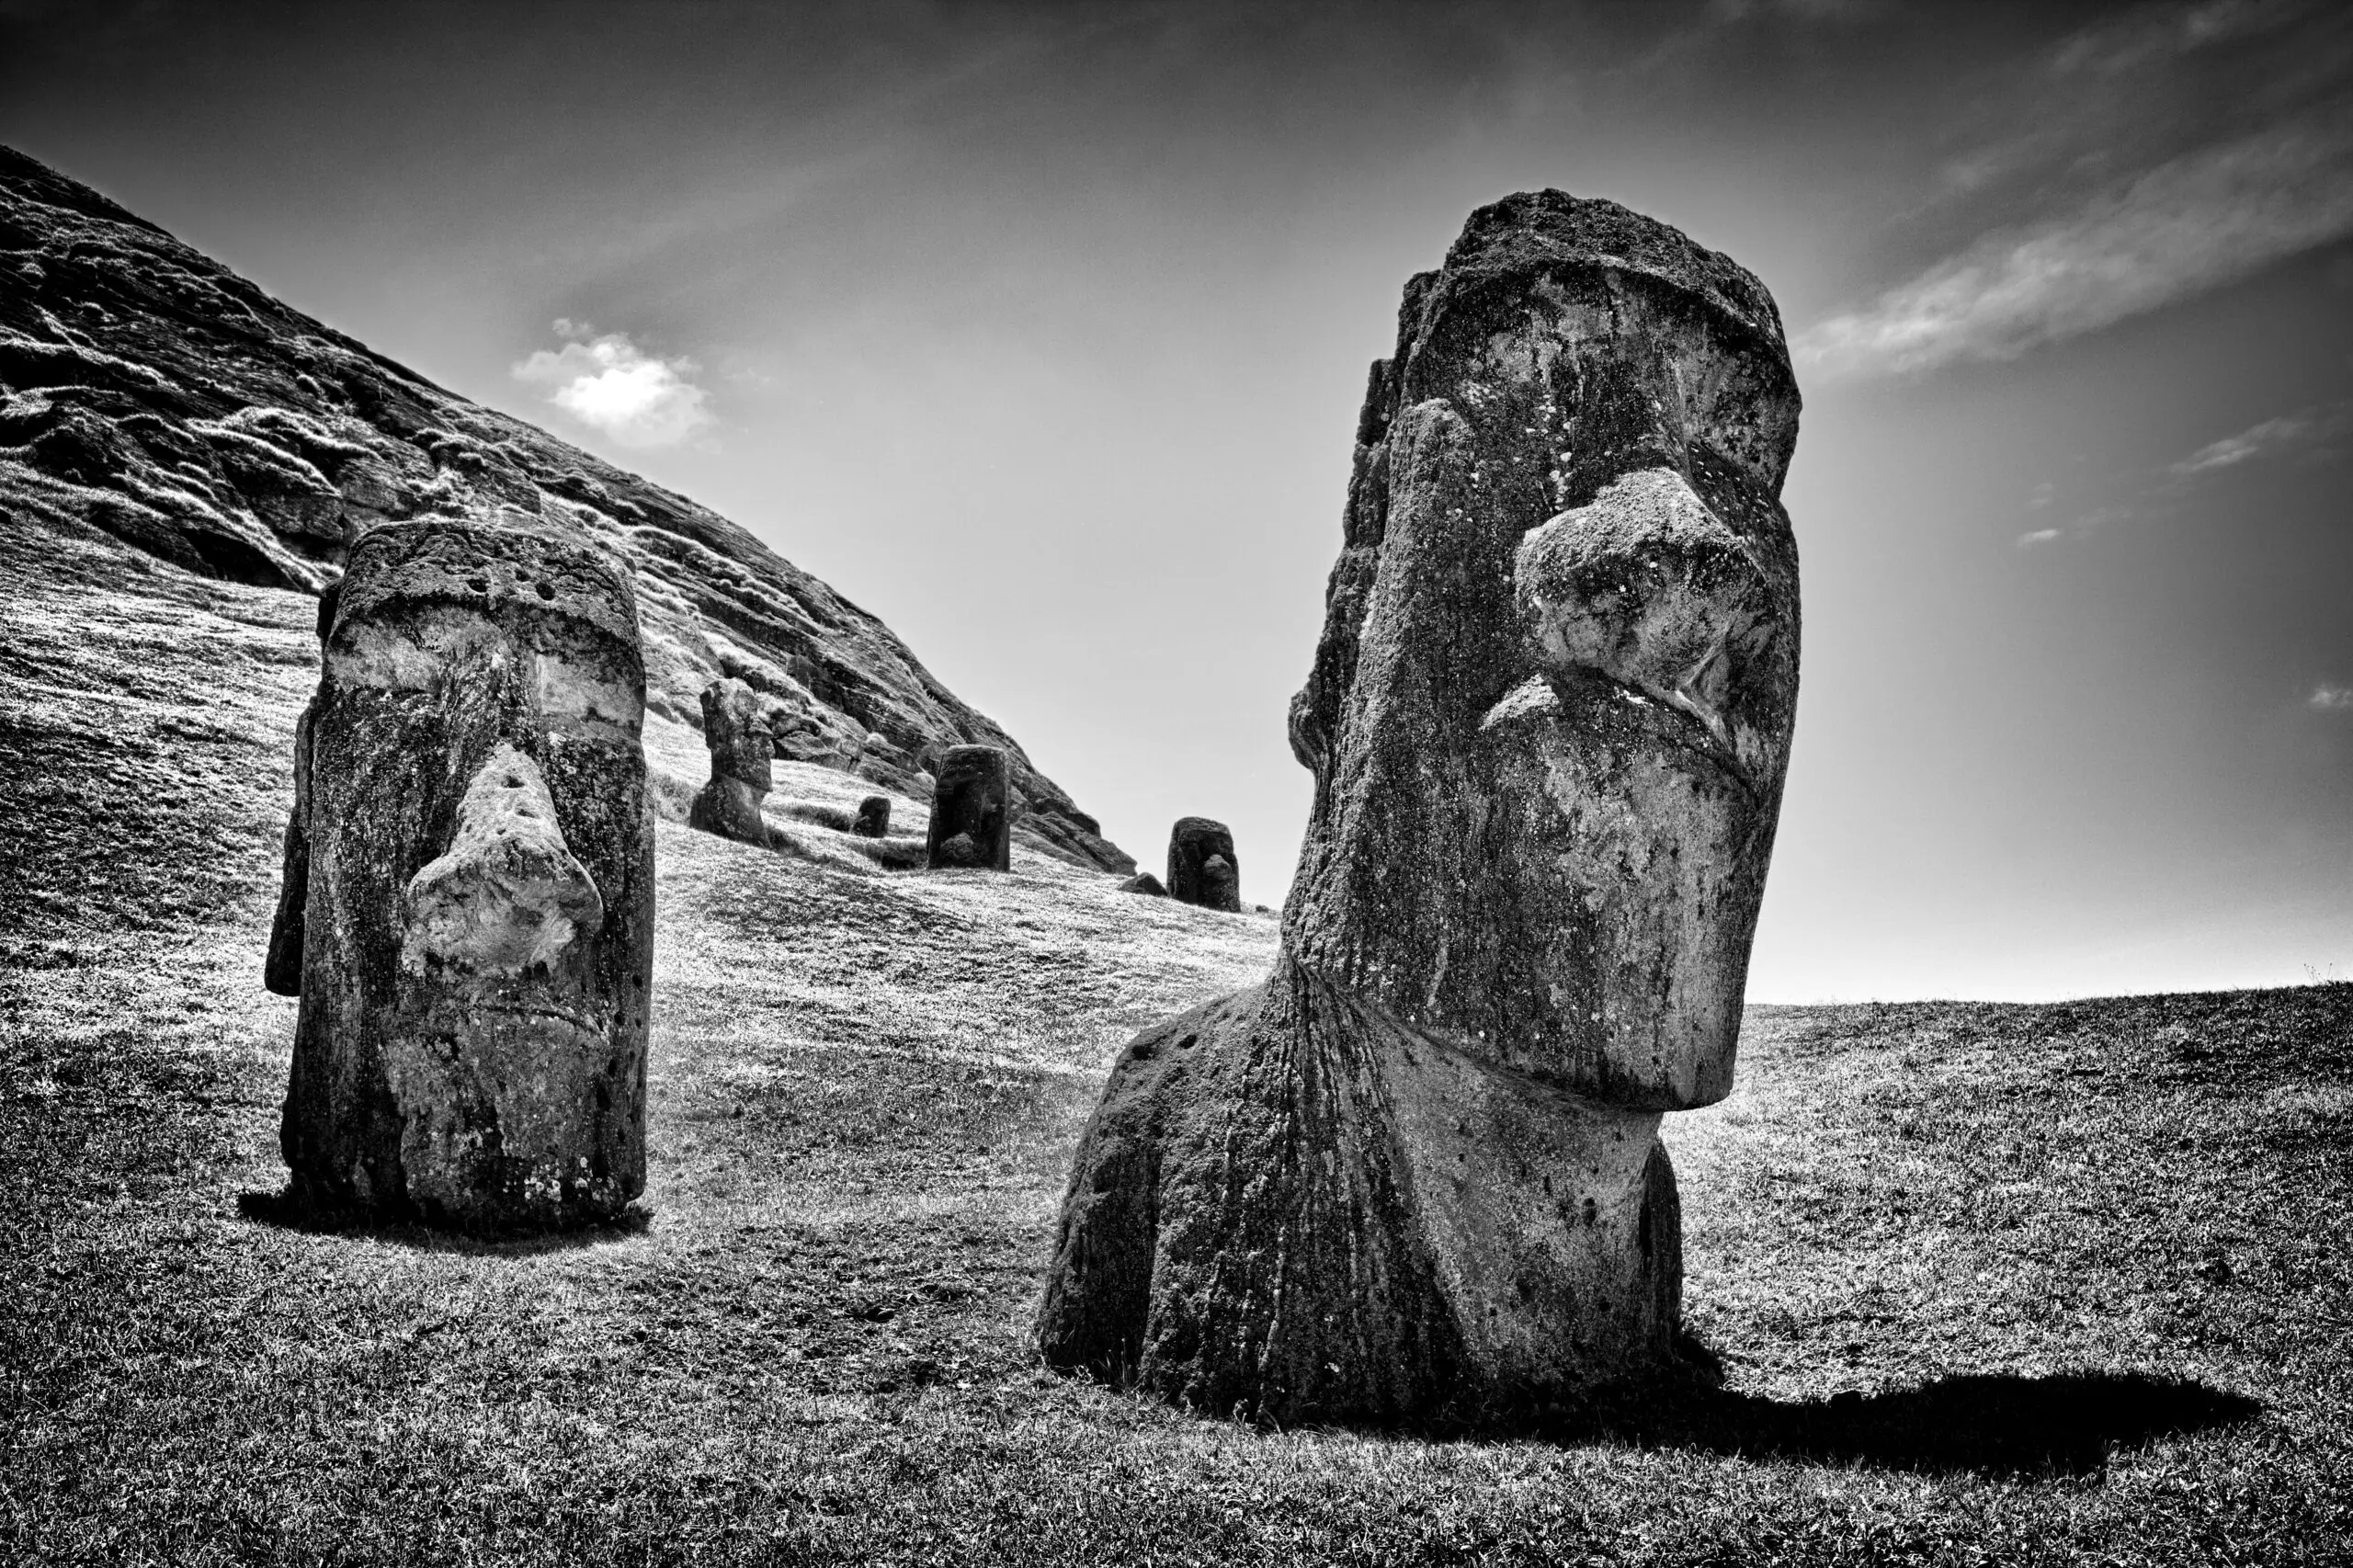 Wandbild (6037) Moai by Ivano Fusetti/HUBER IMAGES präsentiert: Kreatives,Details und Strukturen,Natur,Landschaften,Asien,Steine